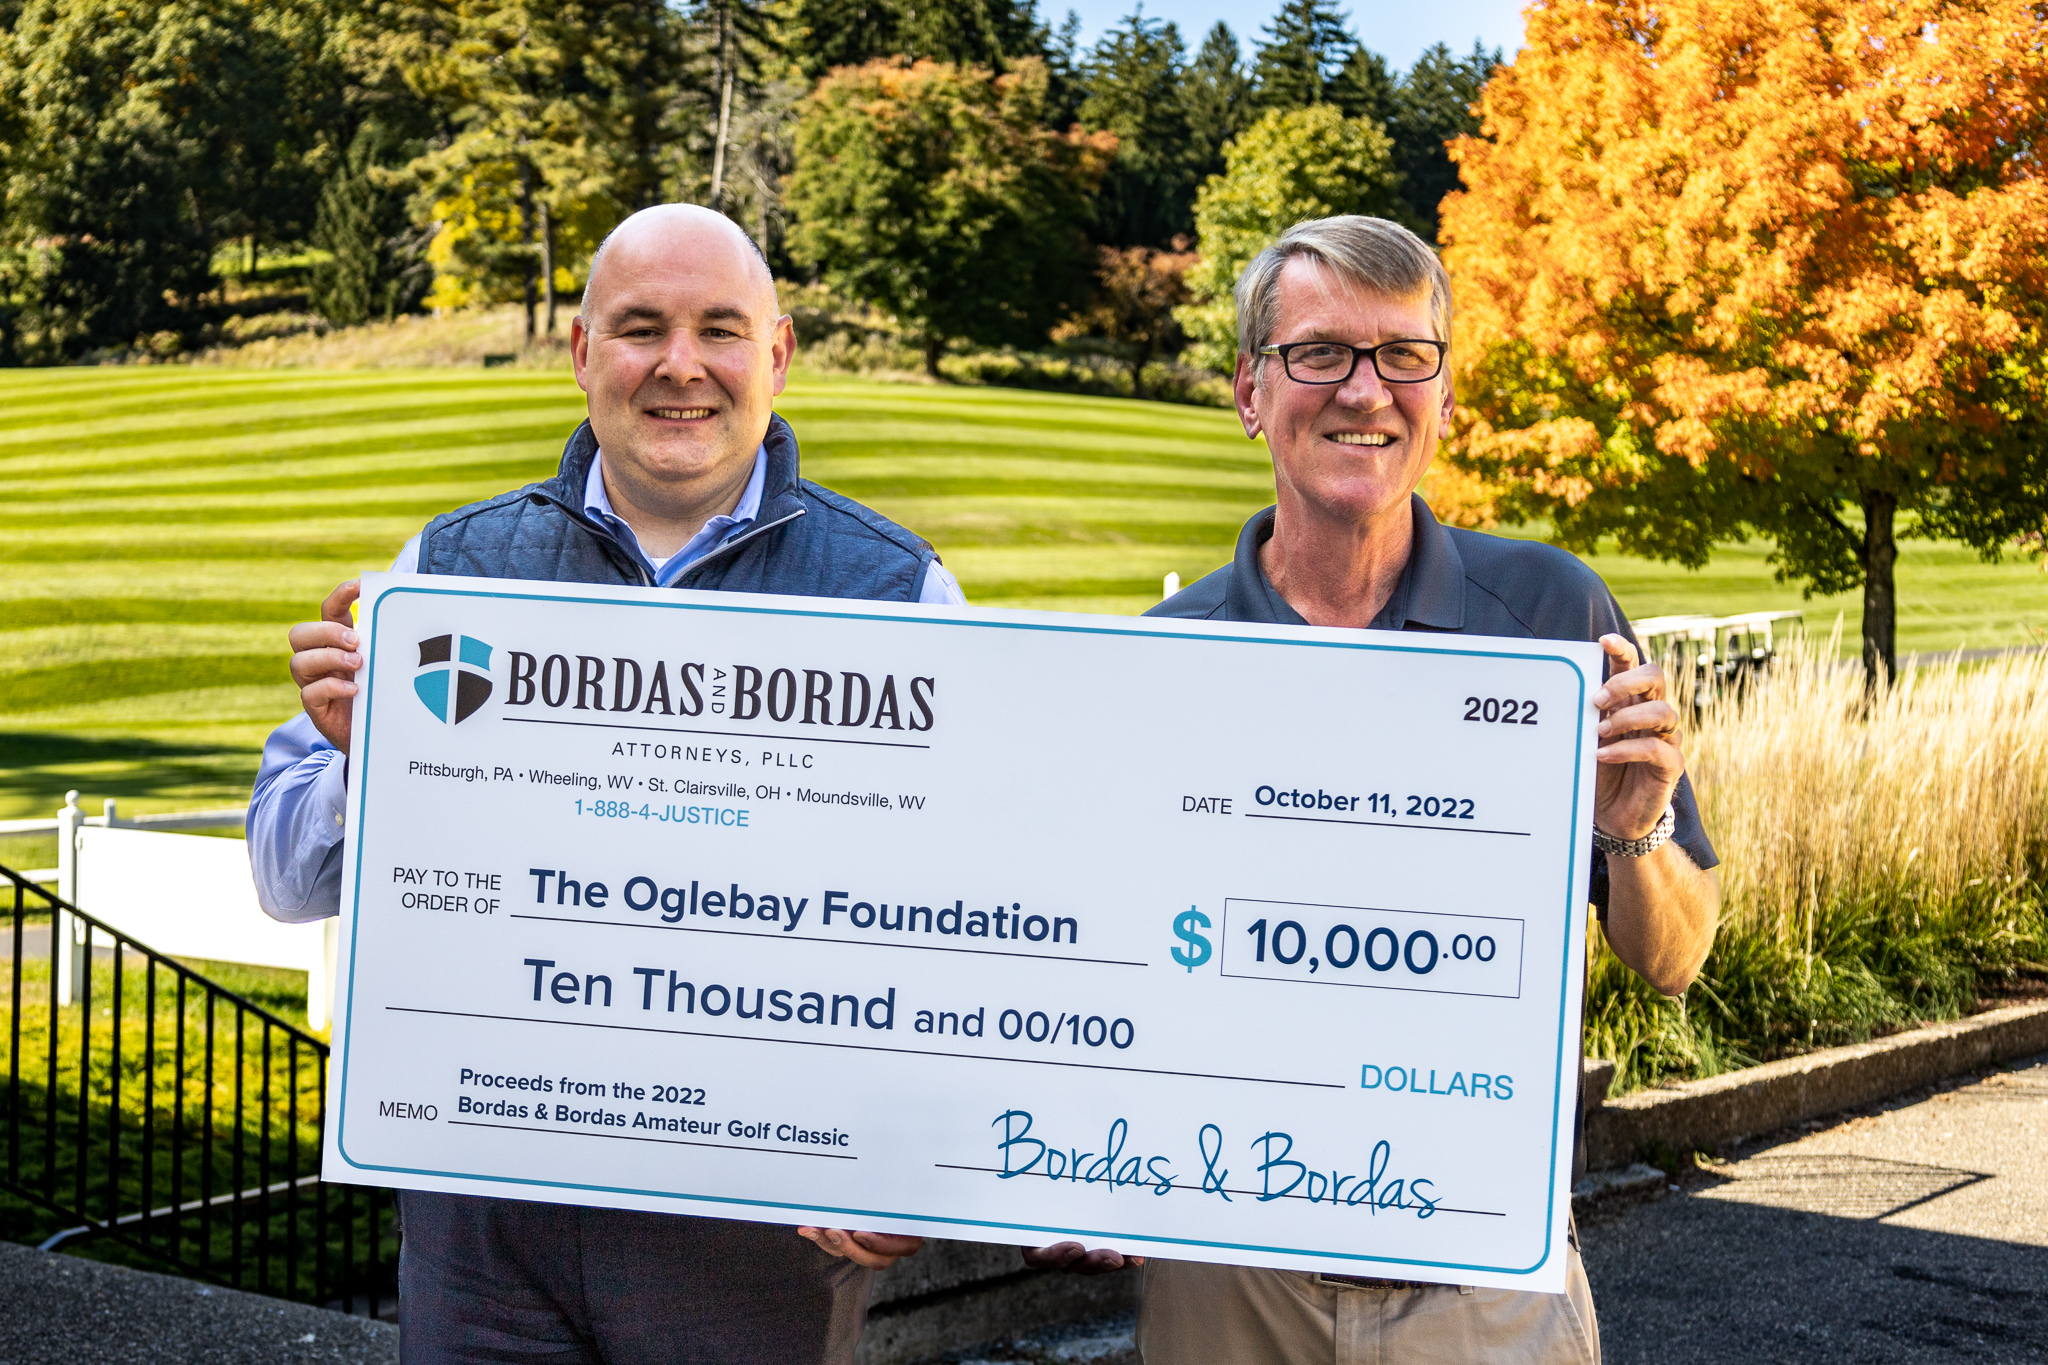 Bordas & Bordas Amateur Golf Classic Proceeds Benefit Oglebay Foundation’s Access to the Parks Program for Fifth Year